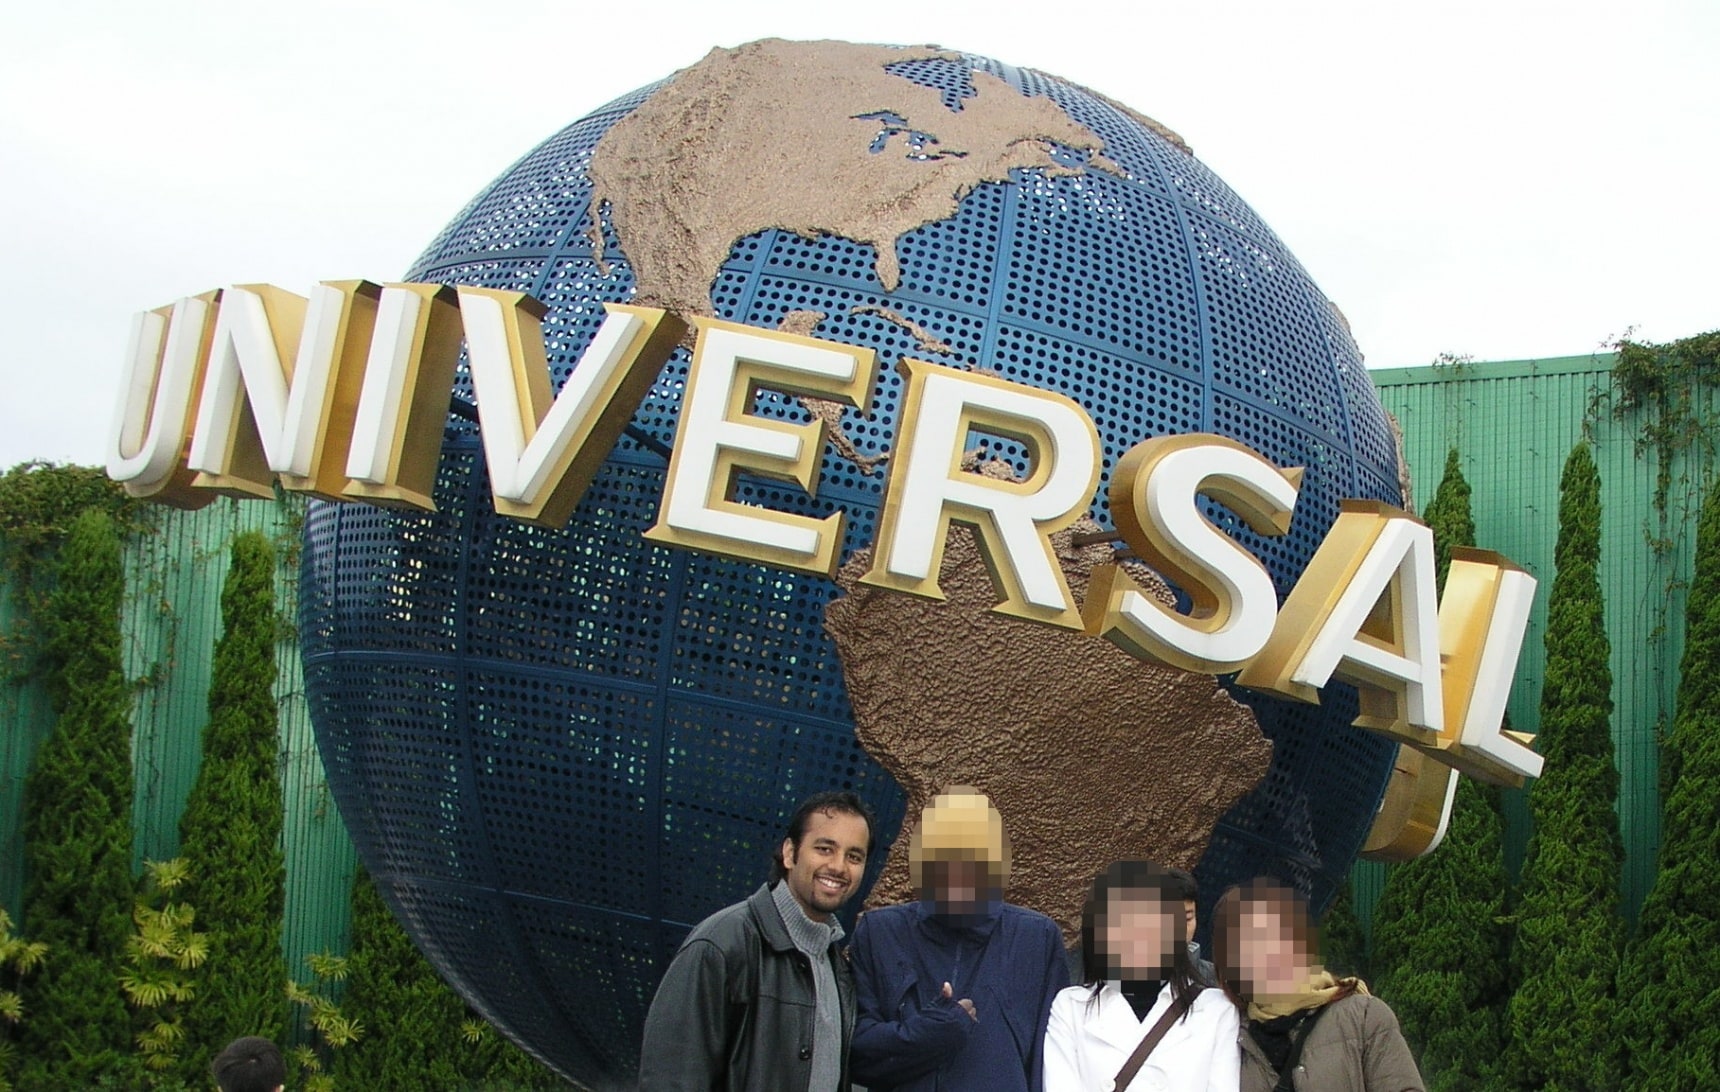 The Magical World of Universal Studios Japan